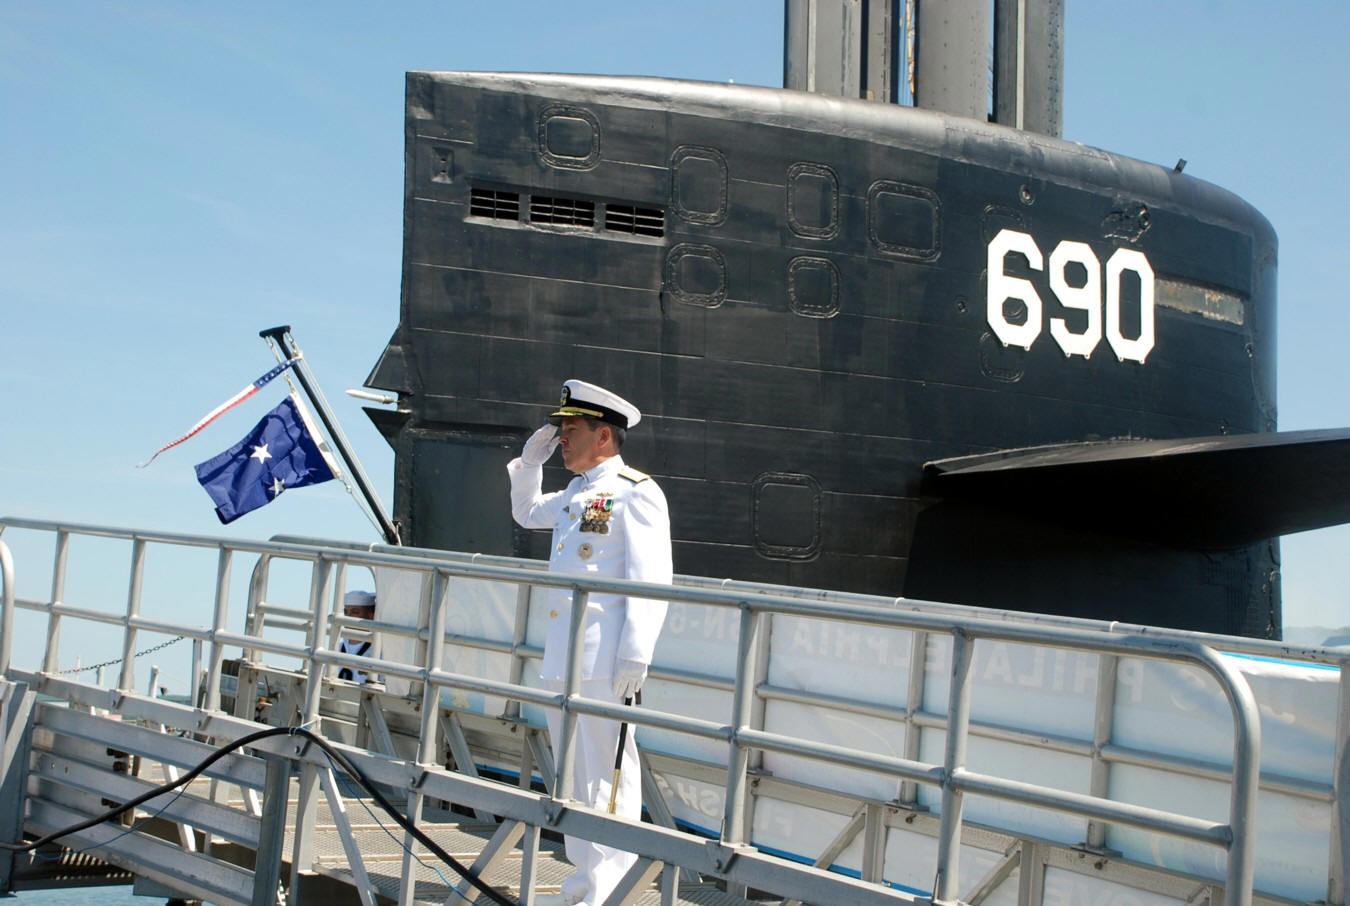 ssn-690 uss philadelphia decommissioning ceremony groton connecticut june 2010